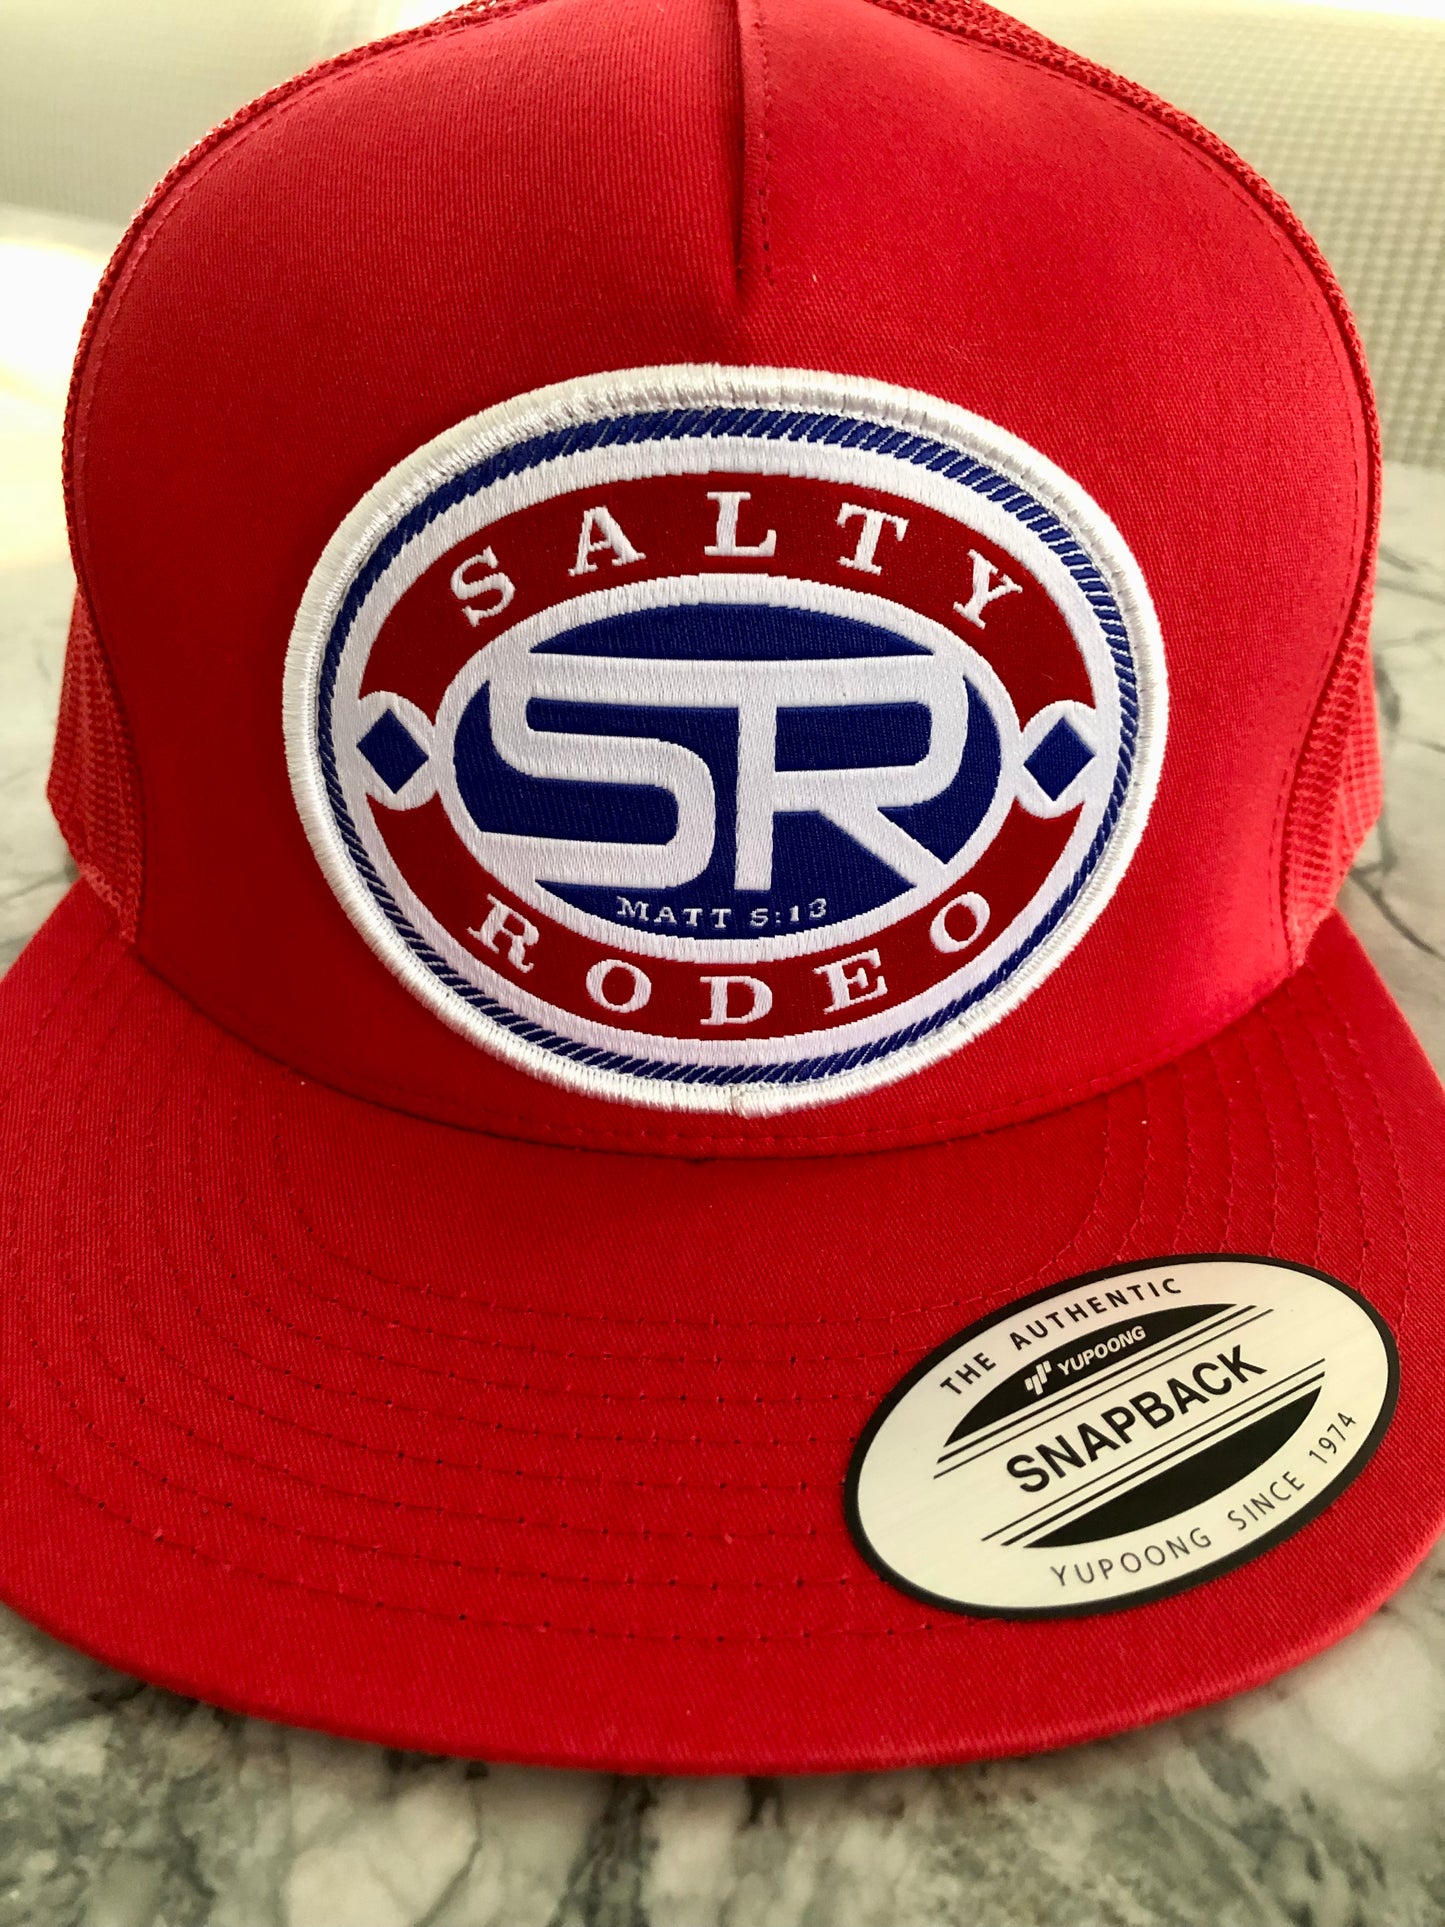 Salty Rodeo “Bandit” hat